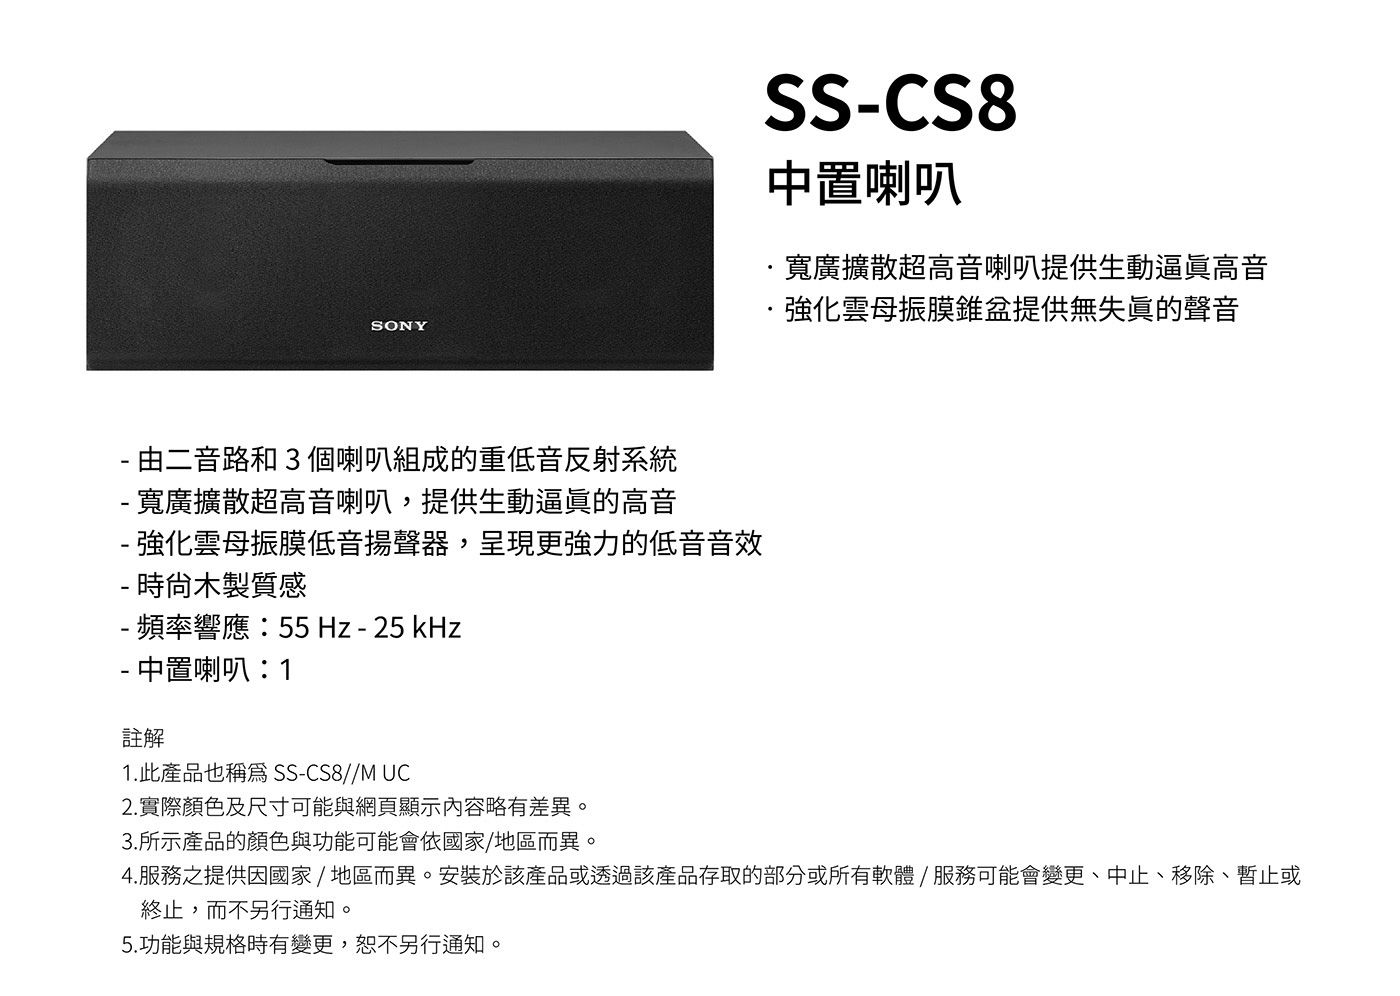 Sony 5.1家庭劇院組含重低音 STR-DH790+SS-CS系列揚聲器，7.2 聲道 AV 接收器、Bluetooth 連線功能，與高解析音質相容。